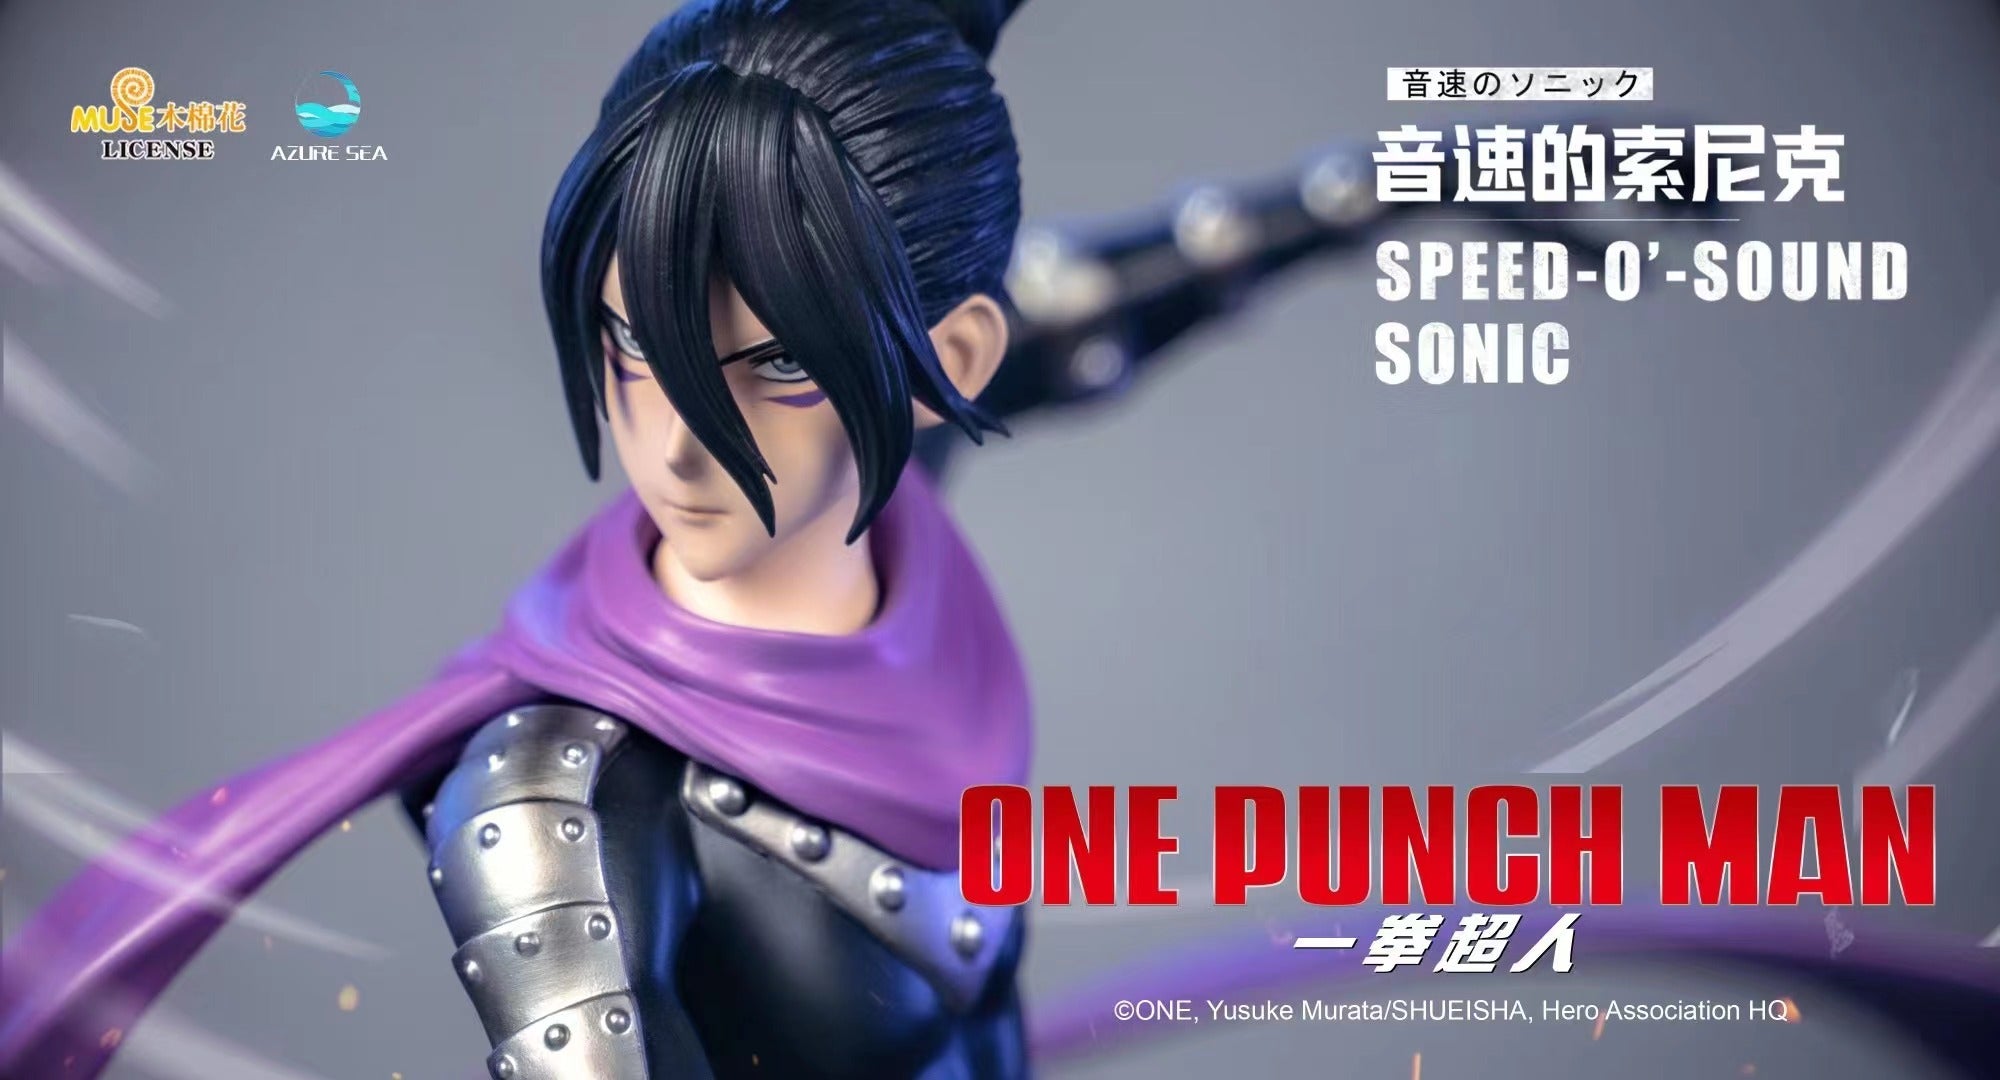 User blog:USklaverei/One-Punch Man - Speed-o'-Sound Sonic reacts